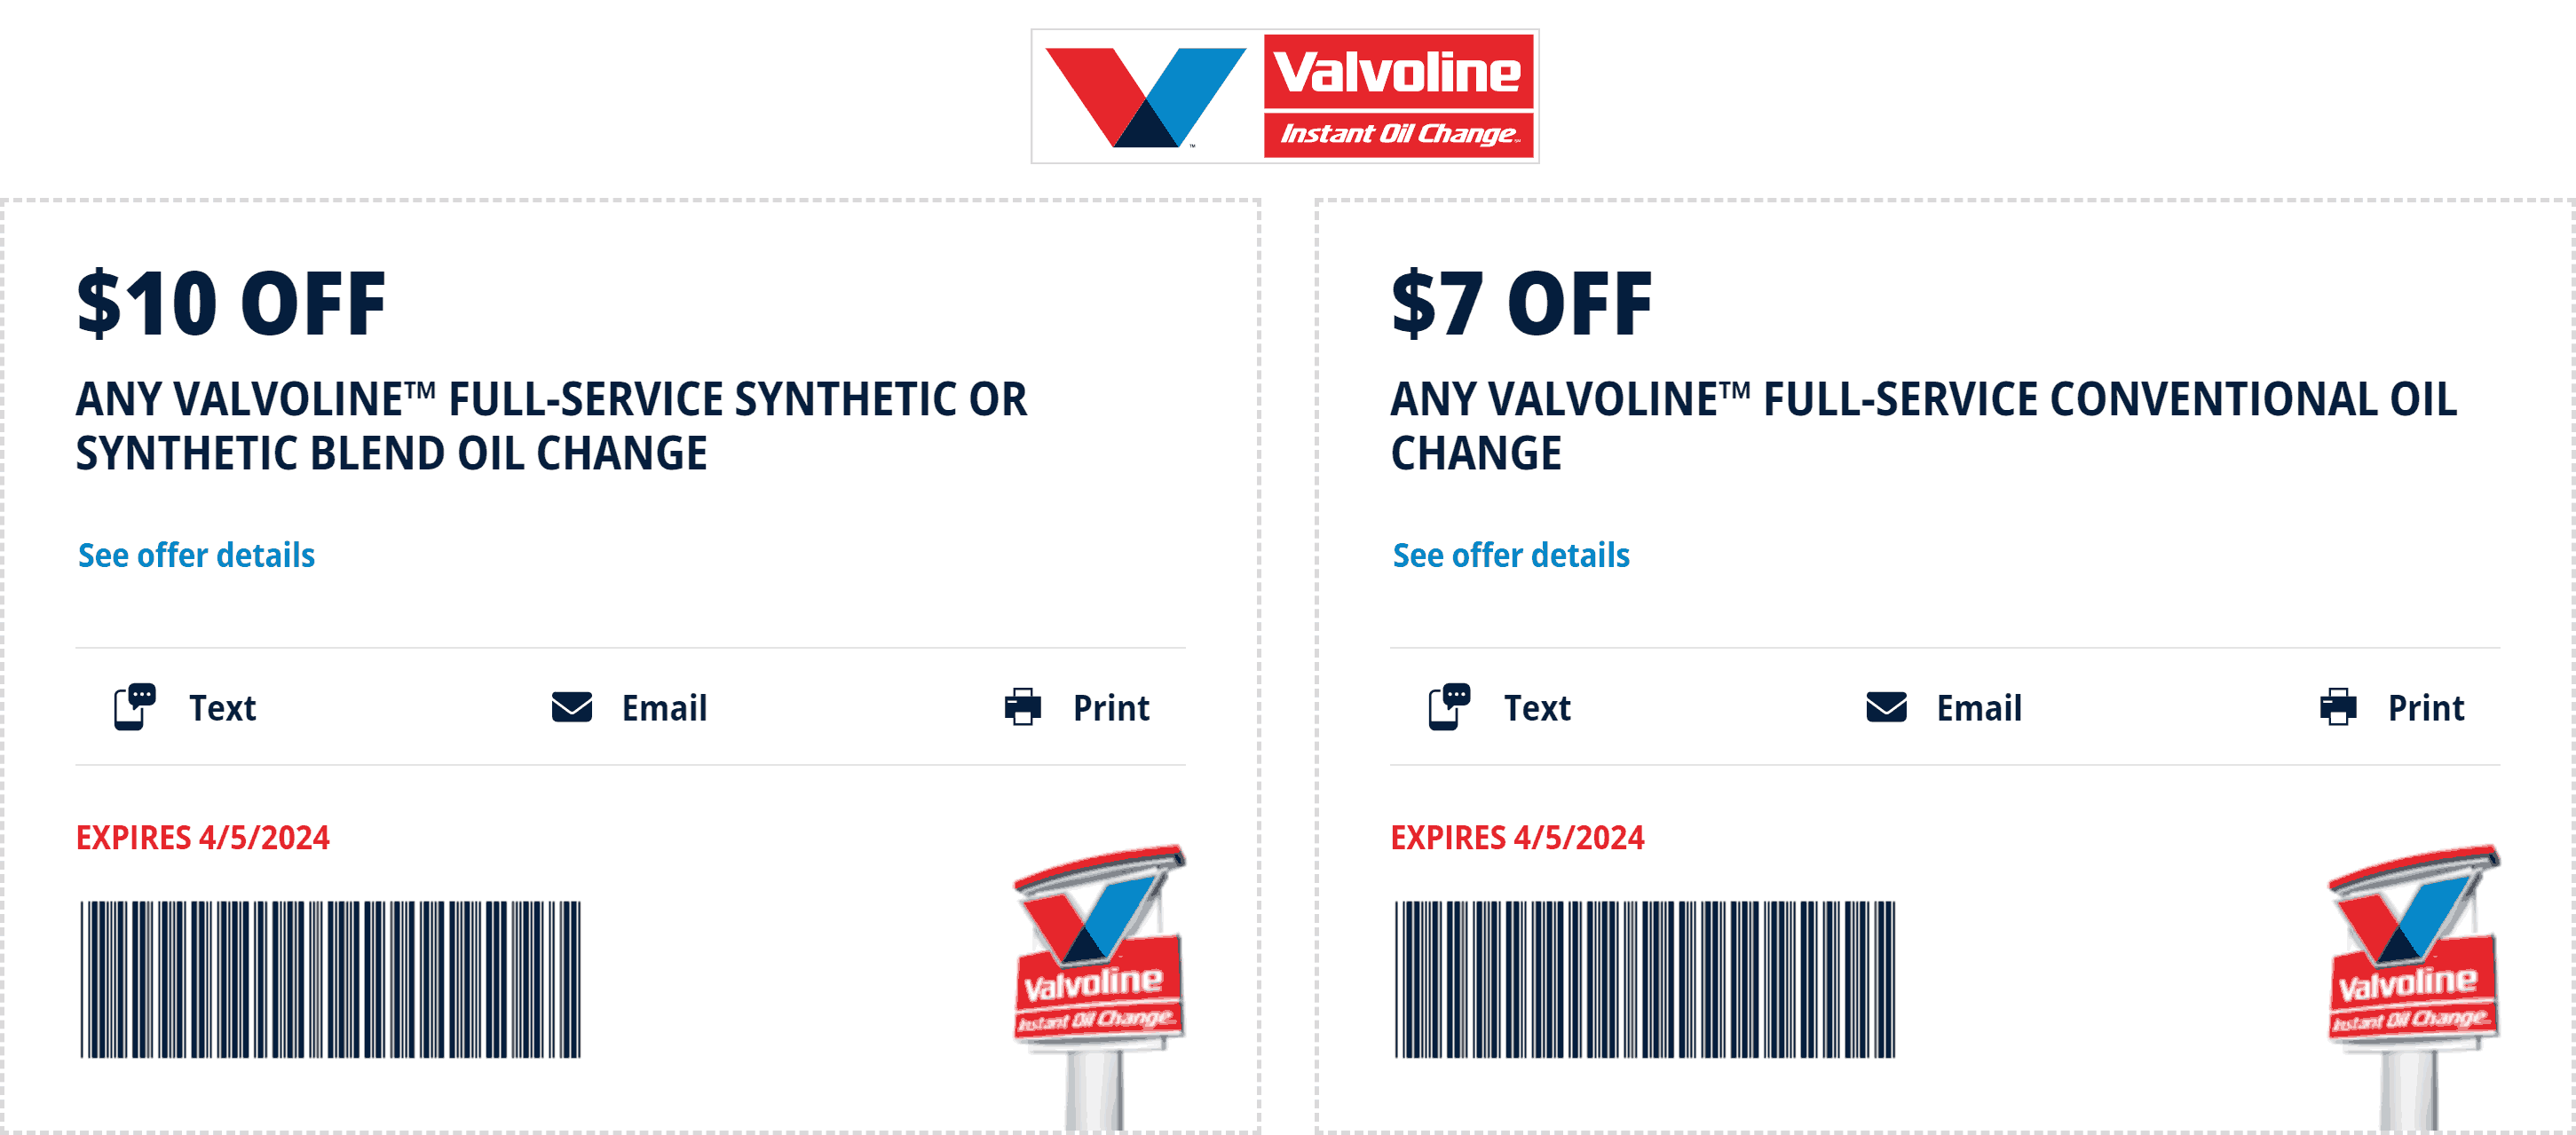 Valvoline stores Coupon  $7-$10 off an oil change at Valvoline #valvoline 